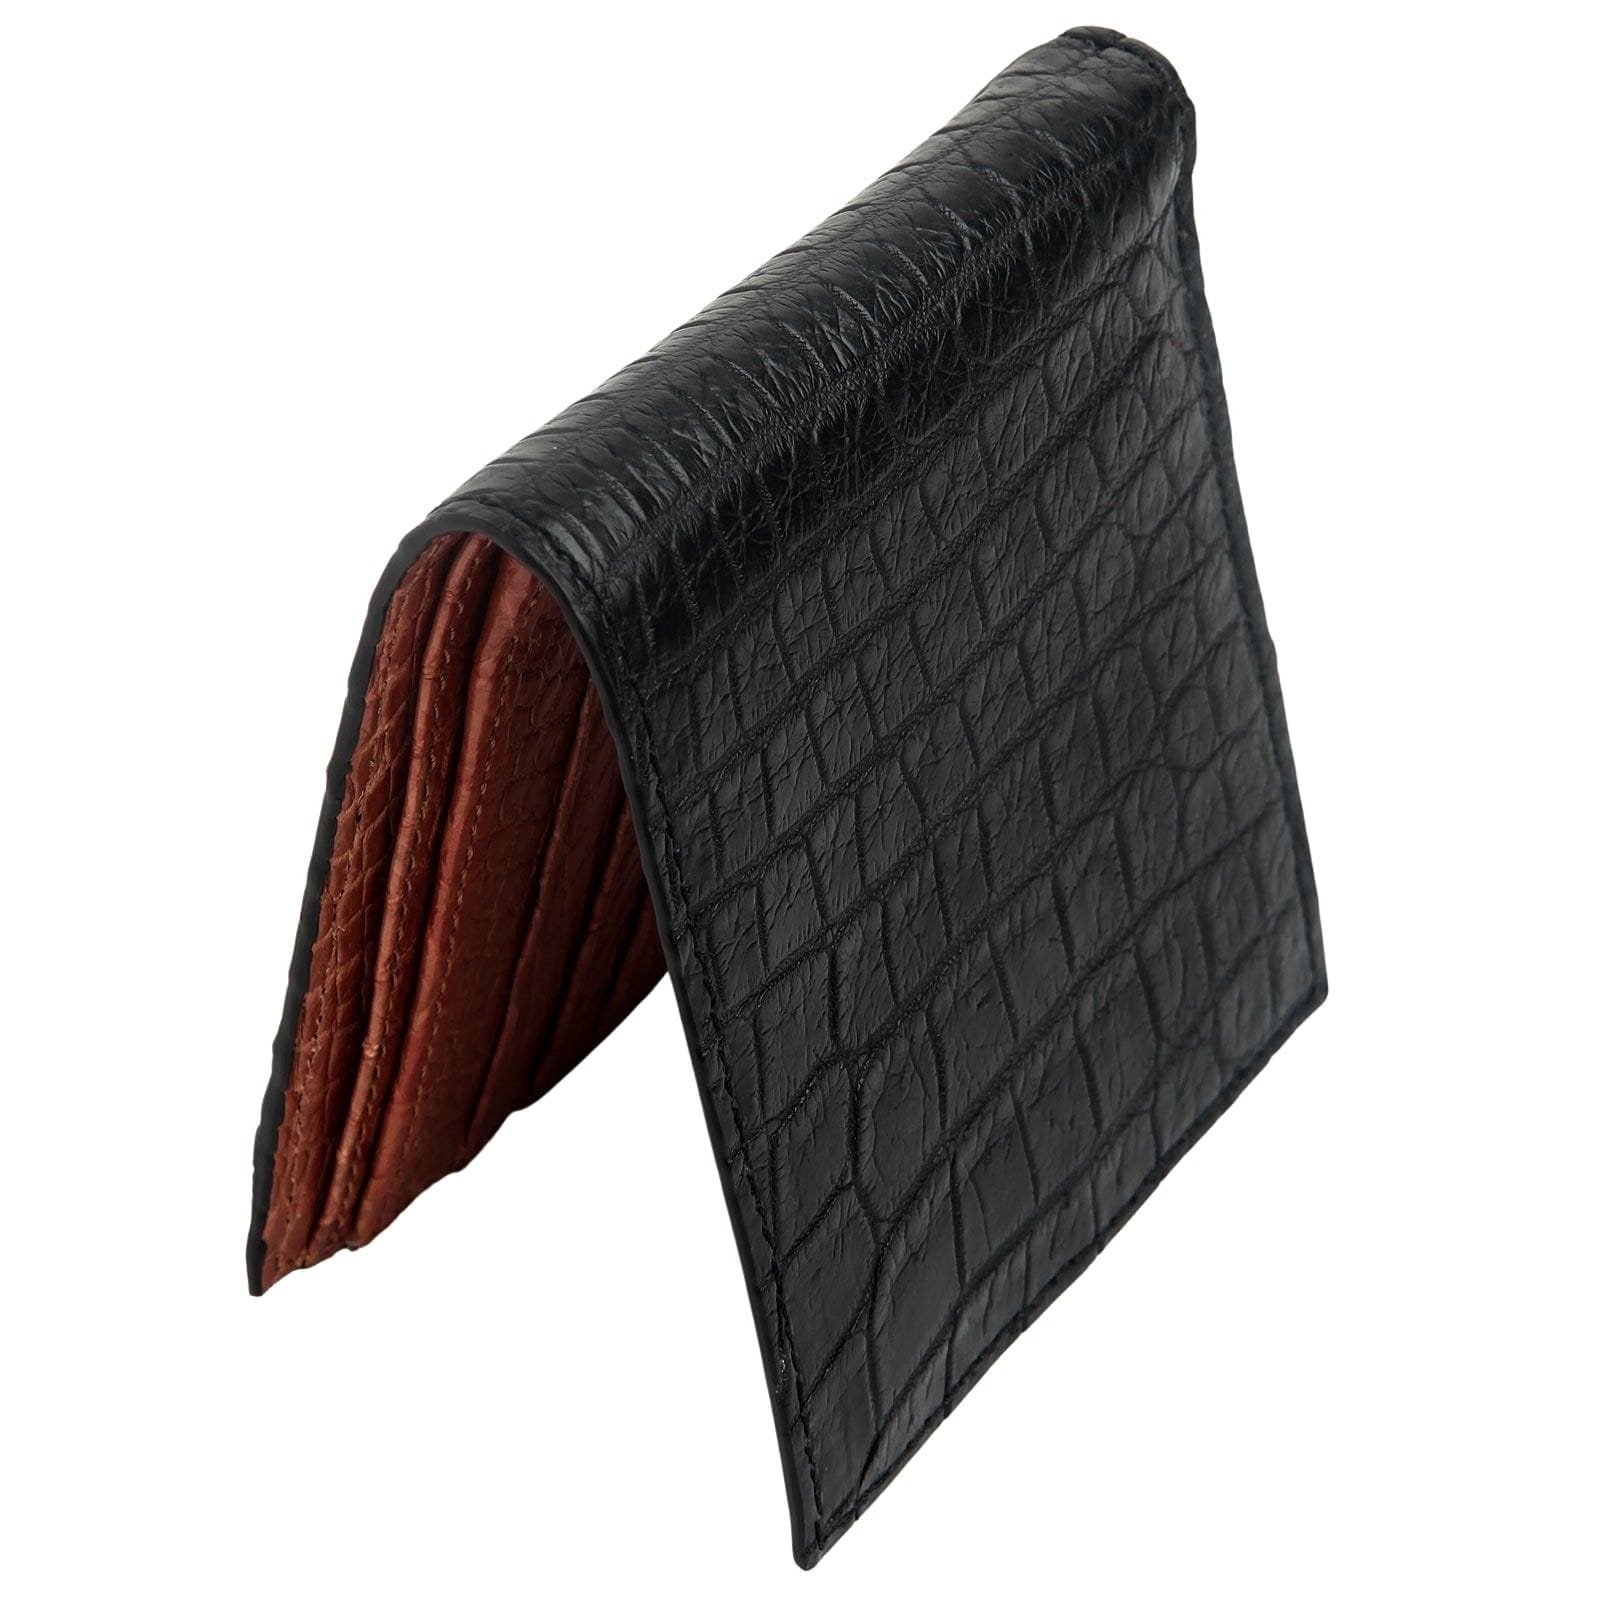 Dark brown crocodile wallet - Luxury leathergoods